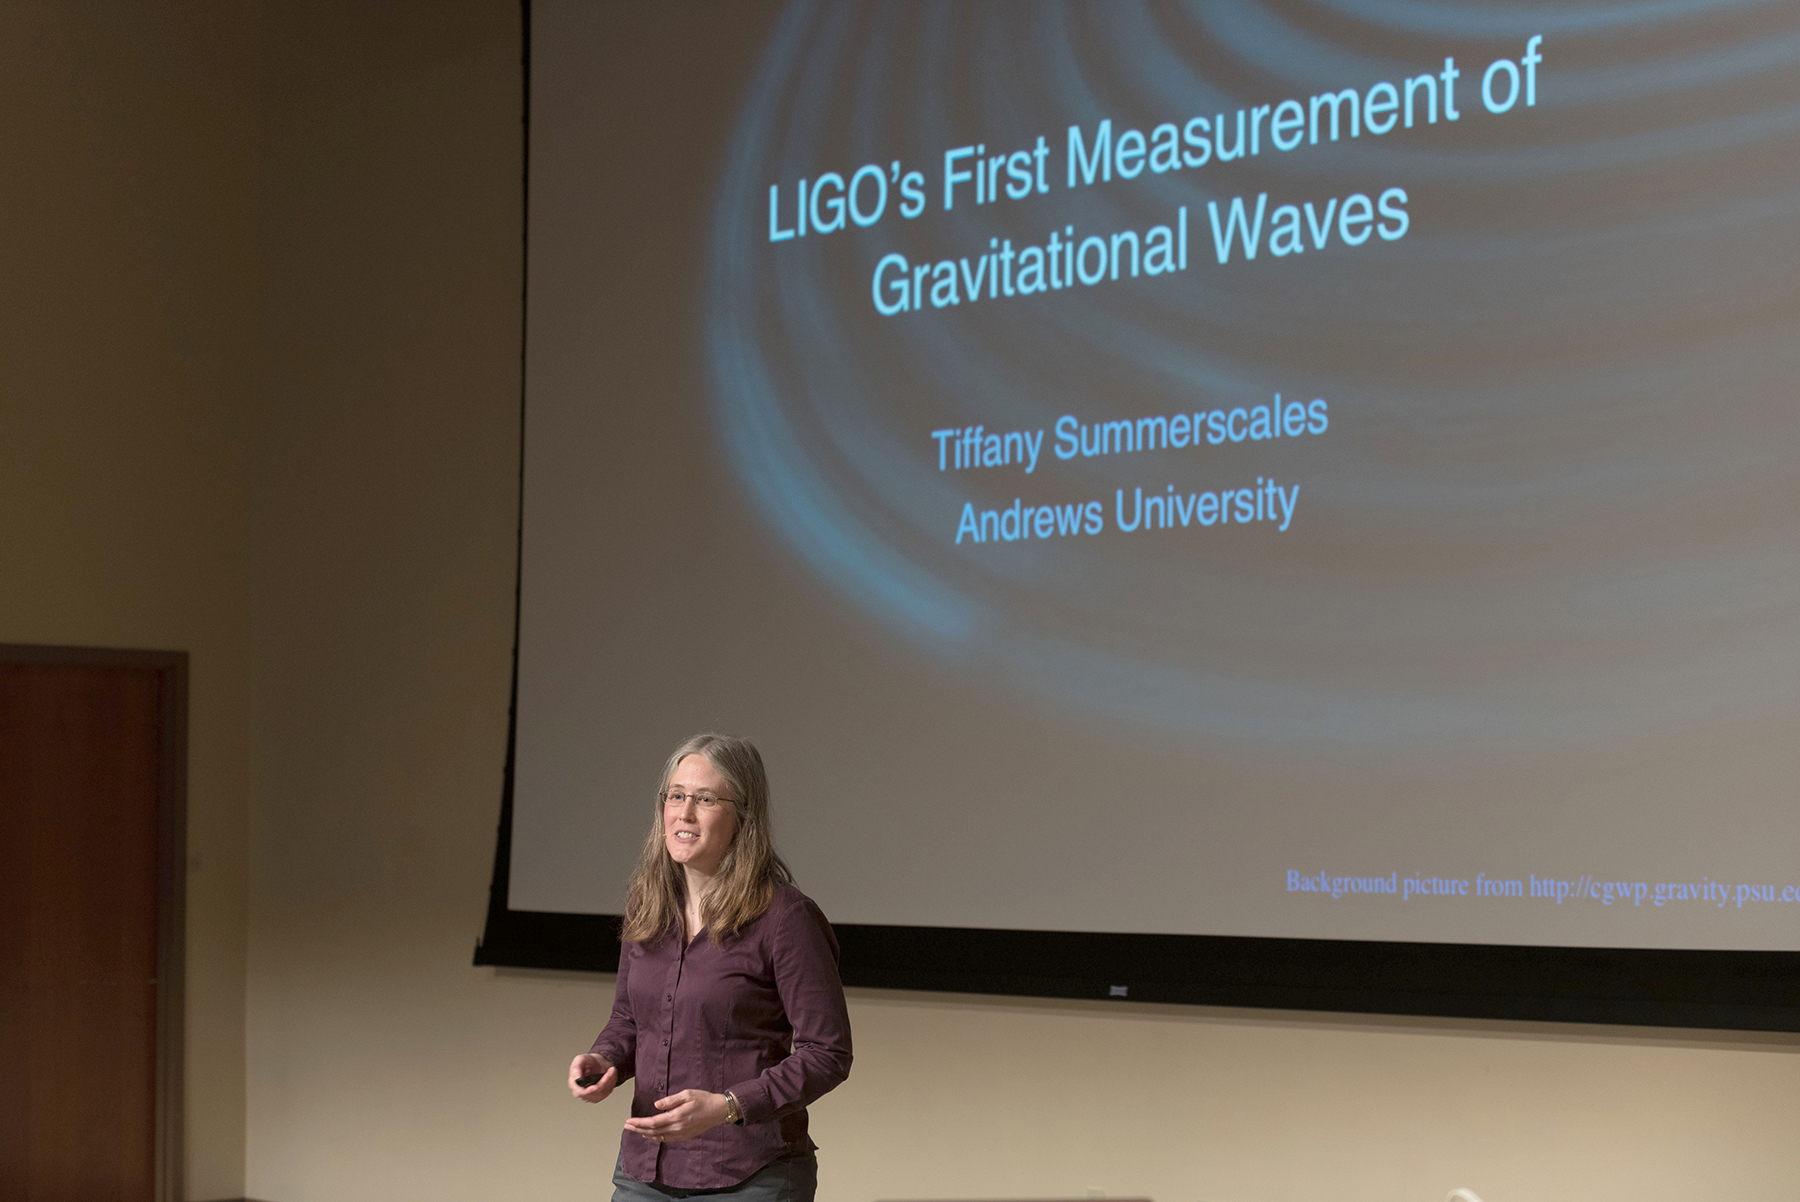 Summerscales presenting on LIGO